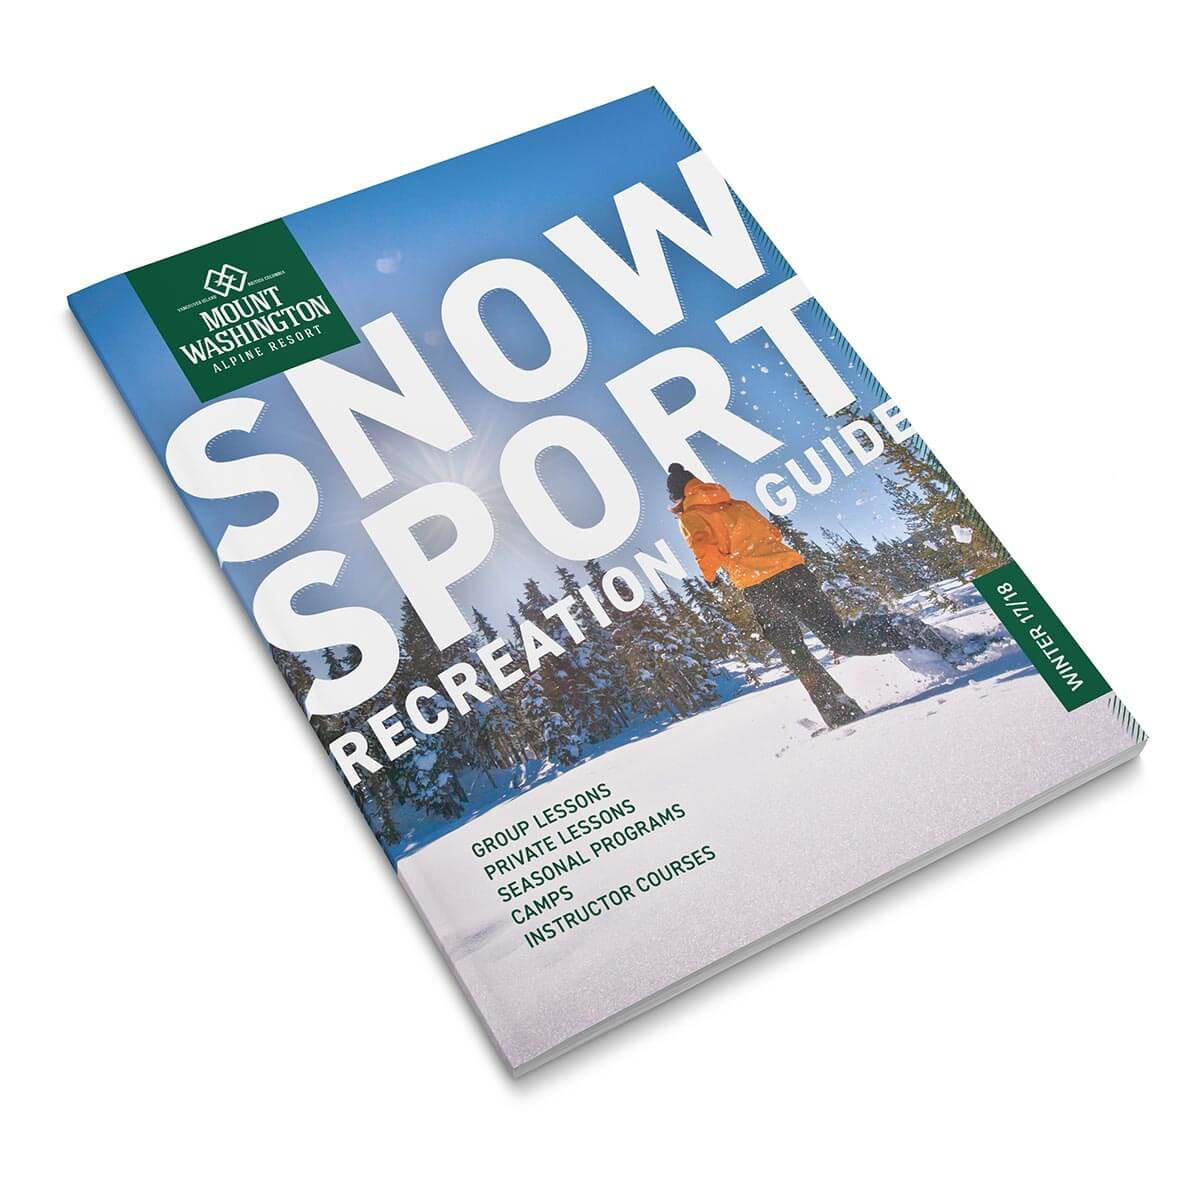 Mount Washington Recreation Guide. Rachel Teresa Park, freelance graphic designer in Victoria, BC